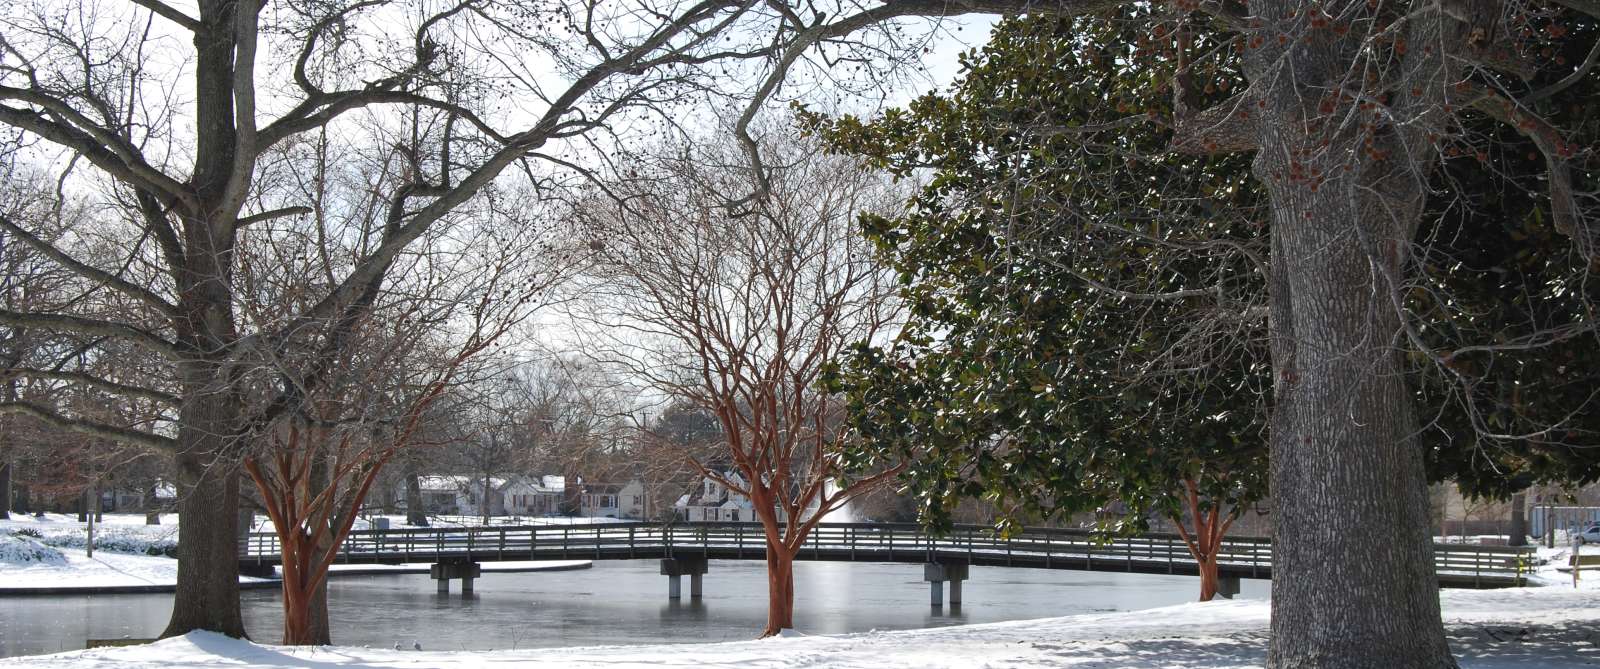 Lakeside Park - Blanket of Snow